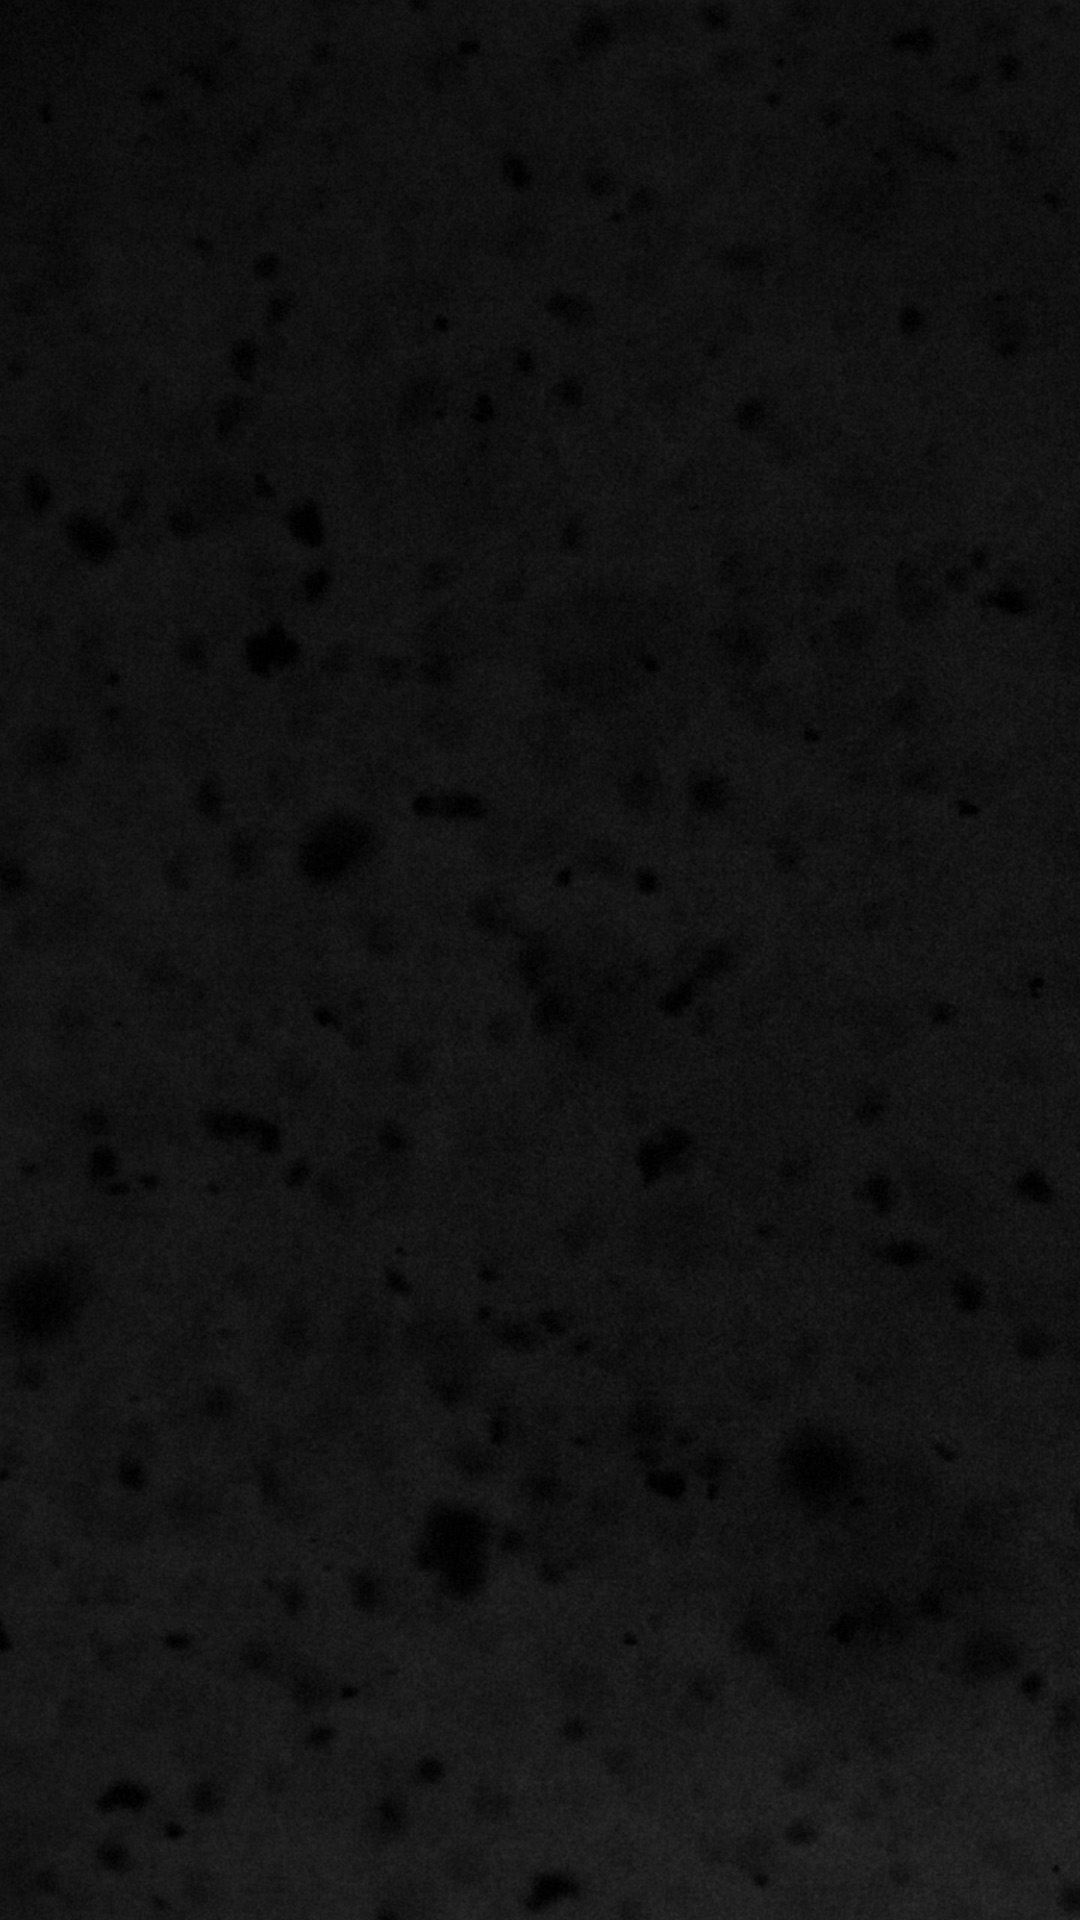  38 Black  Galaxy Wallpaper  on WallpaperSafari